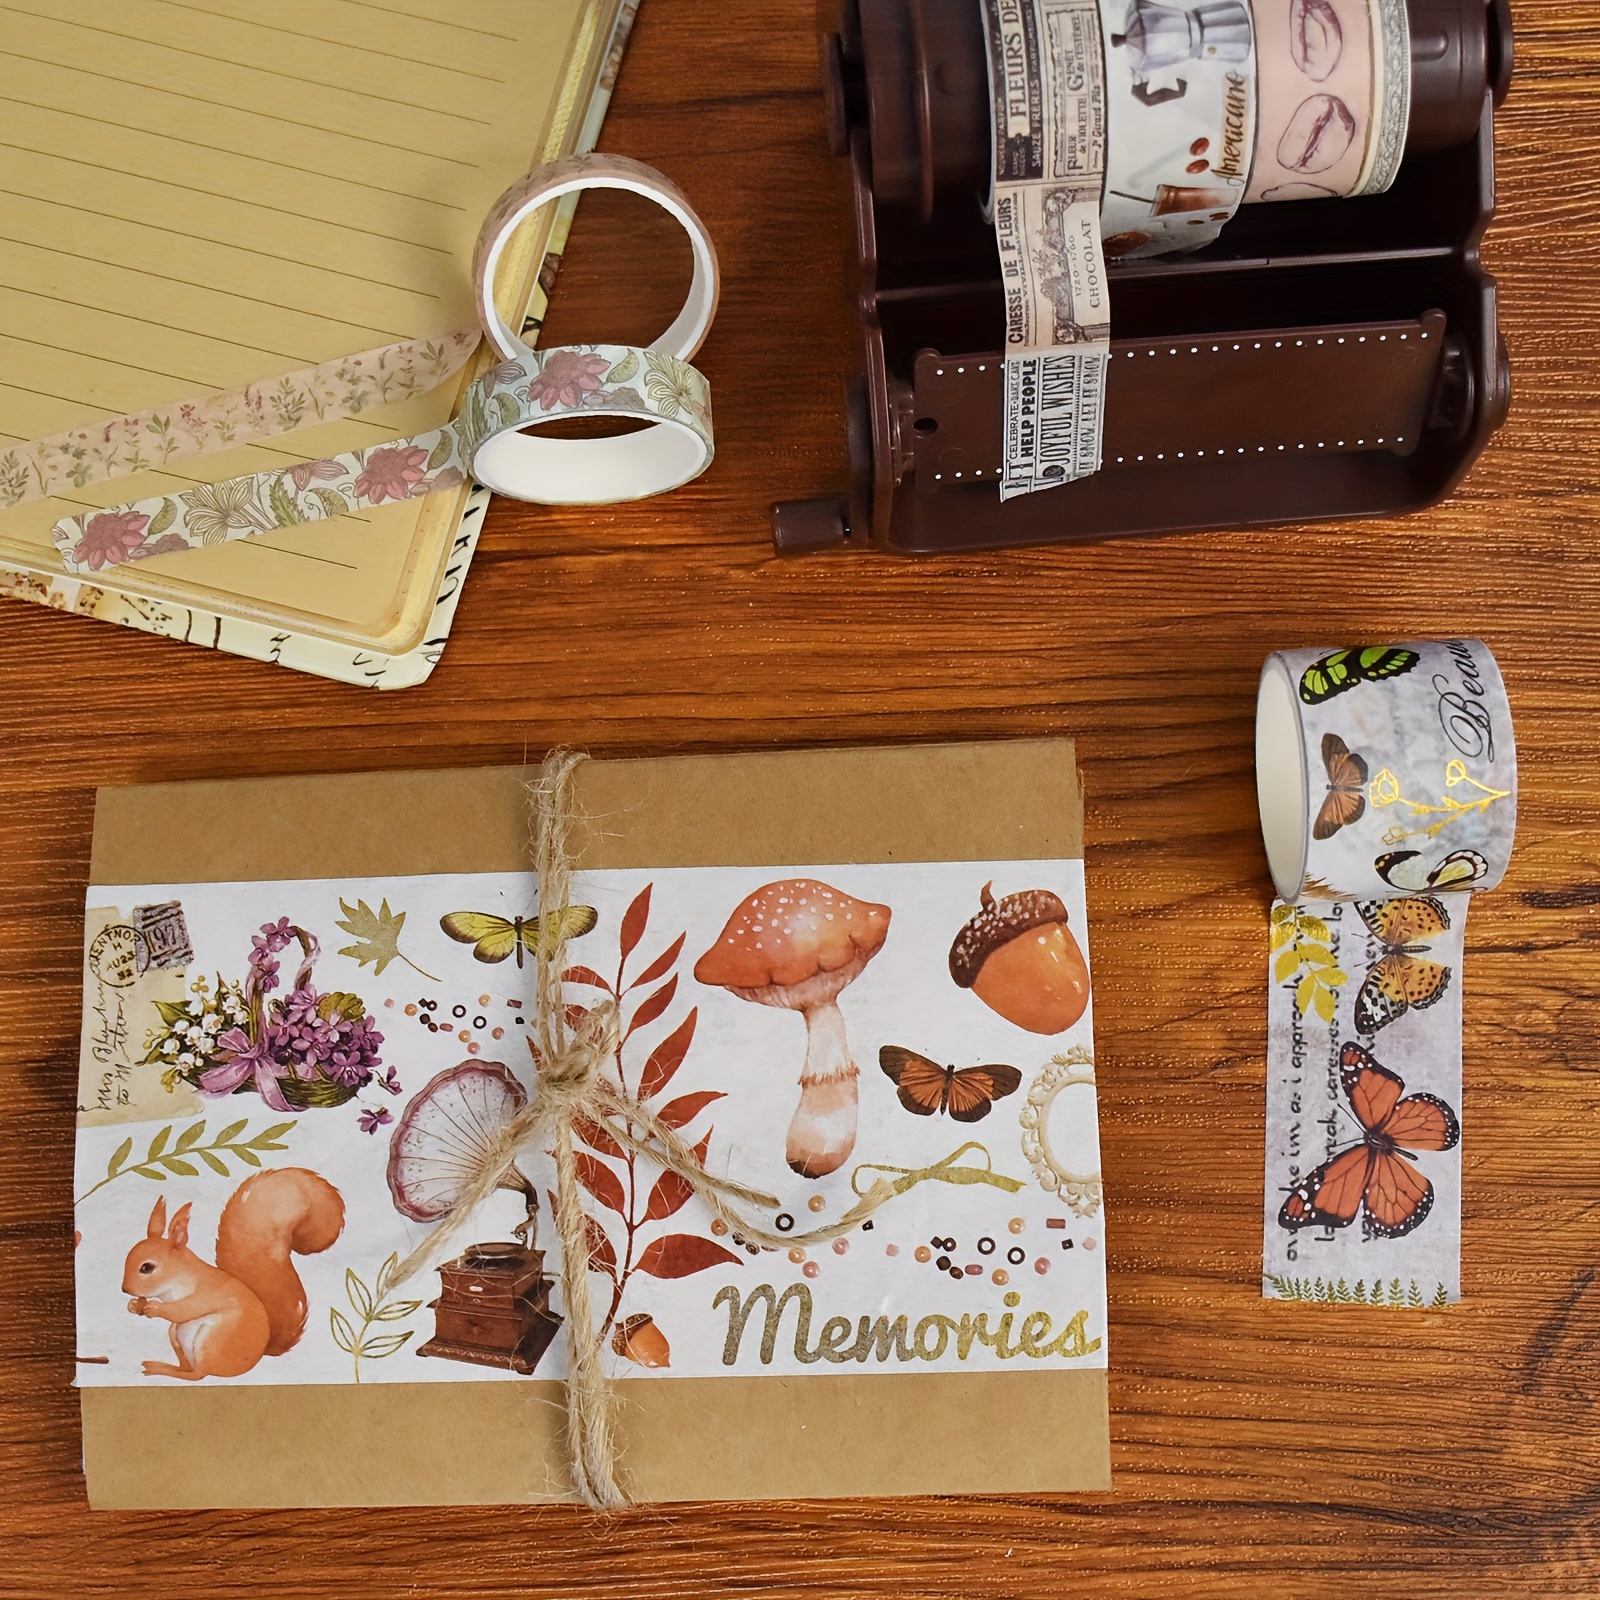 Cute Scene Washi Tape Aesthetic Scrapbooking Notebooks Diary